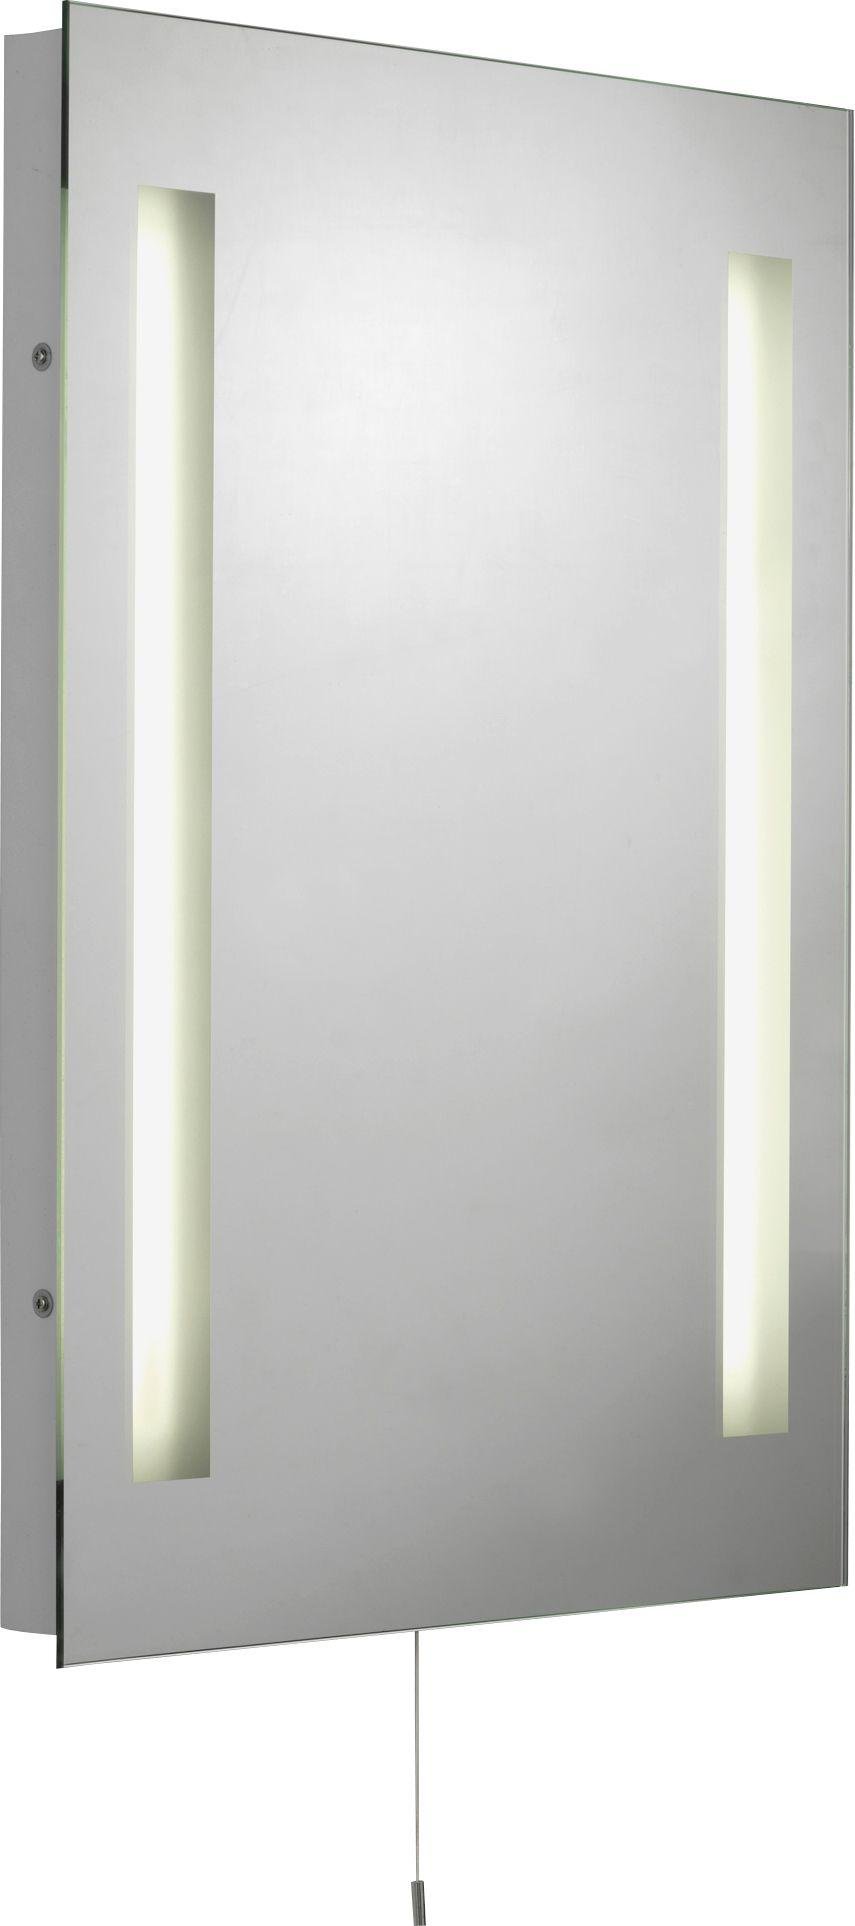 Argos Home Rec Illuminated Bathroom Mirror with Shaver Point